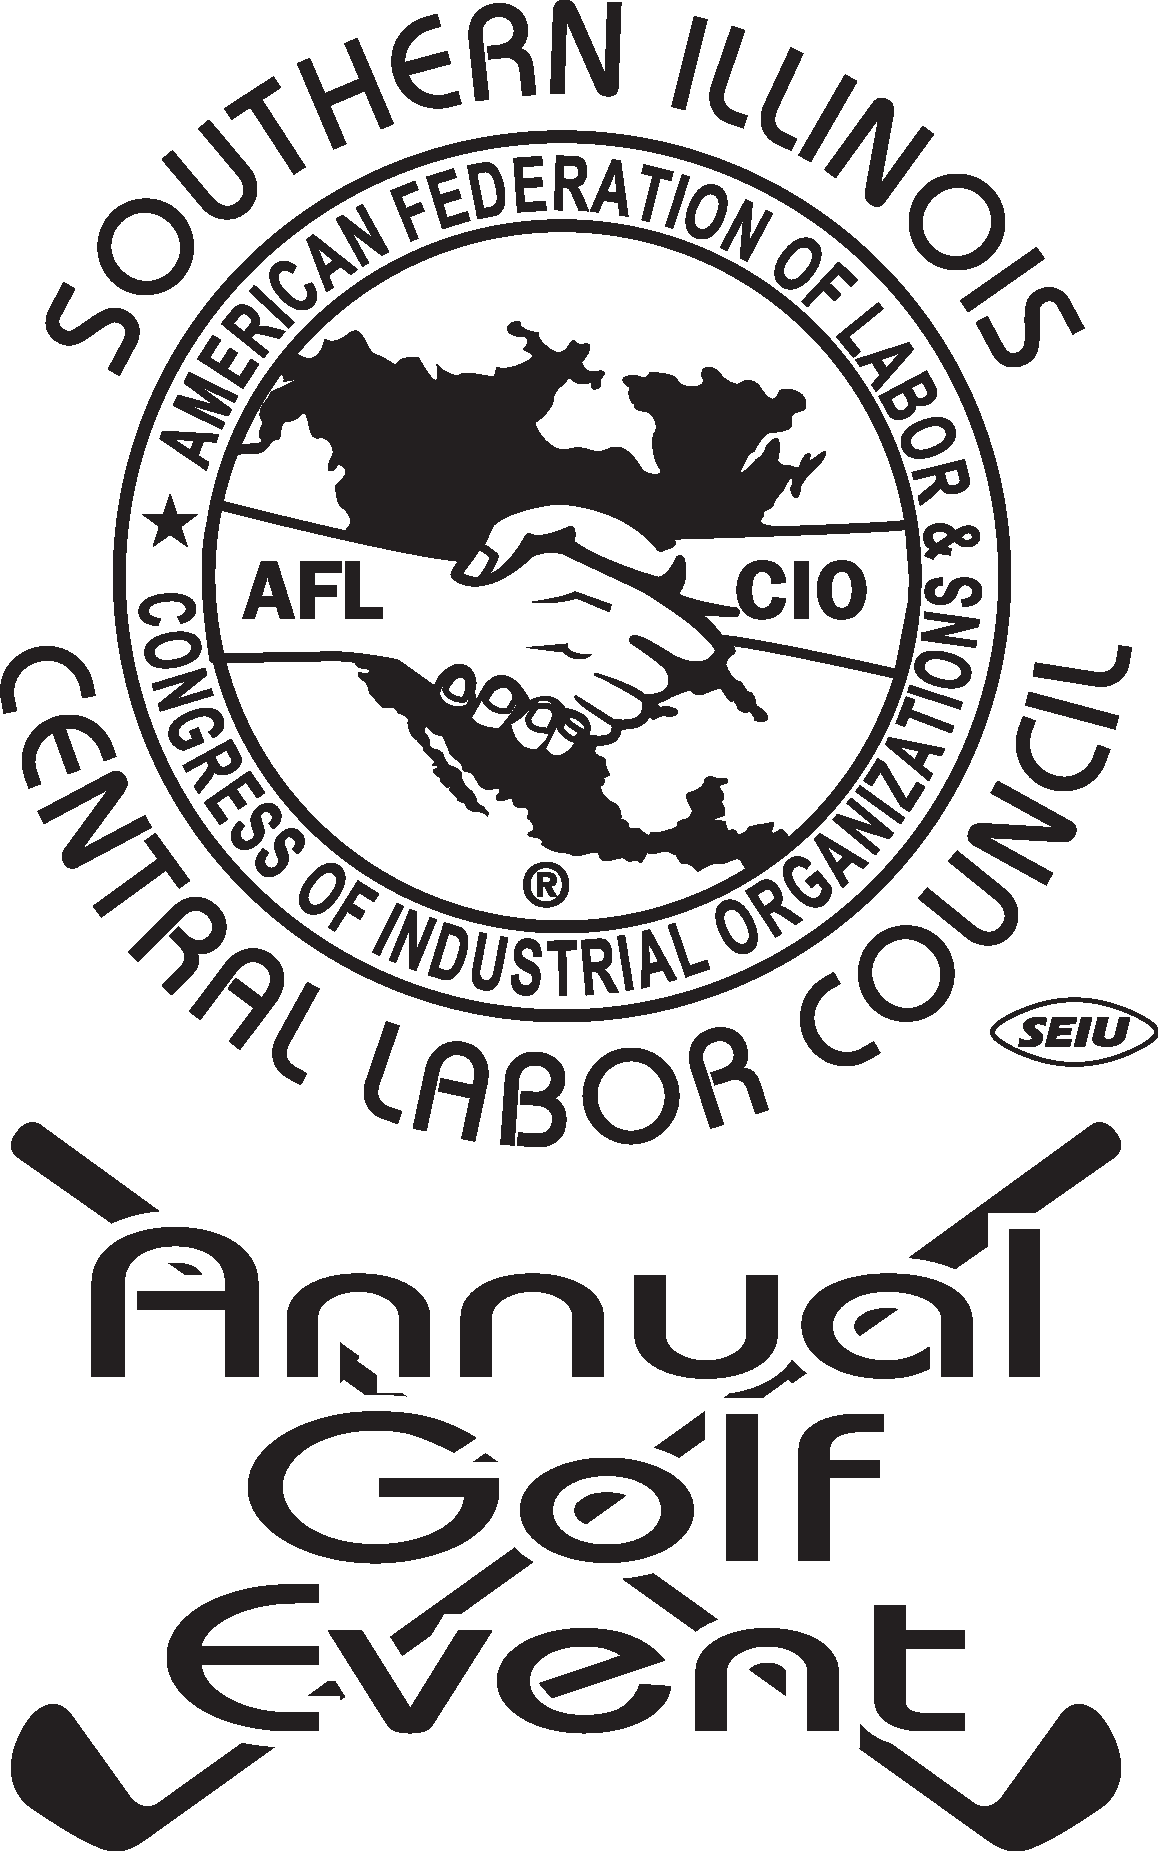 Southern Illinois Central Labor Council Annual Golf Event Logo Vector